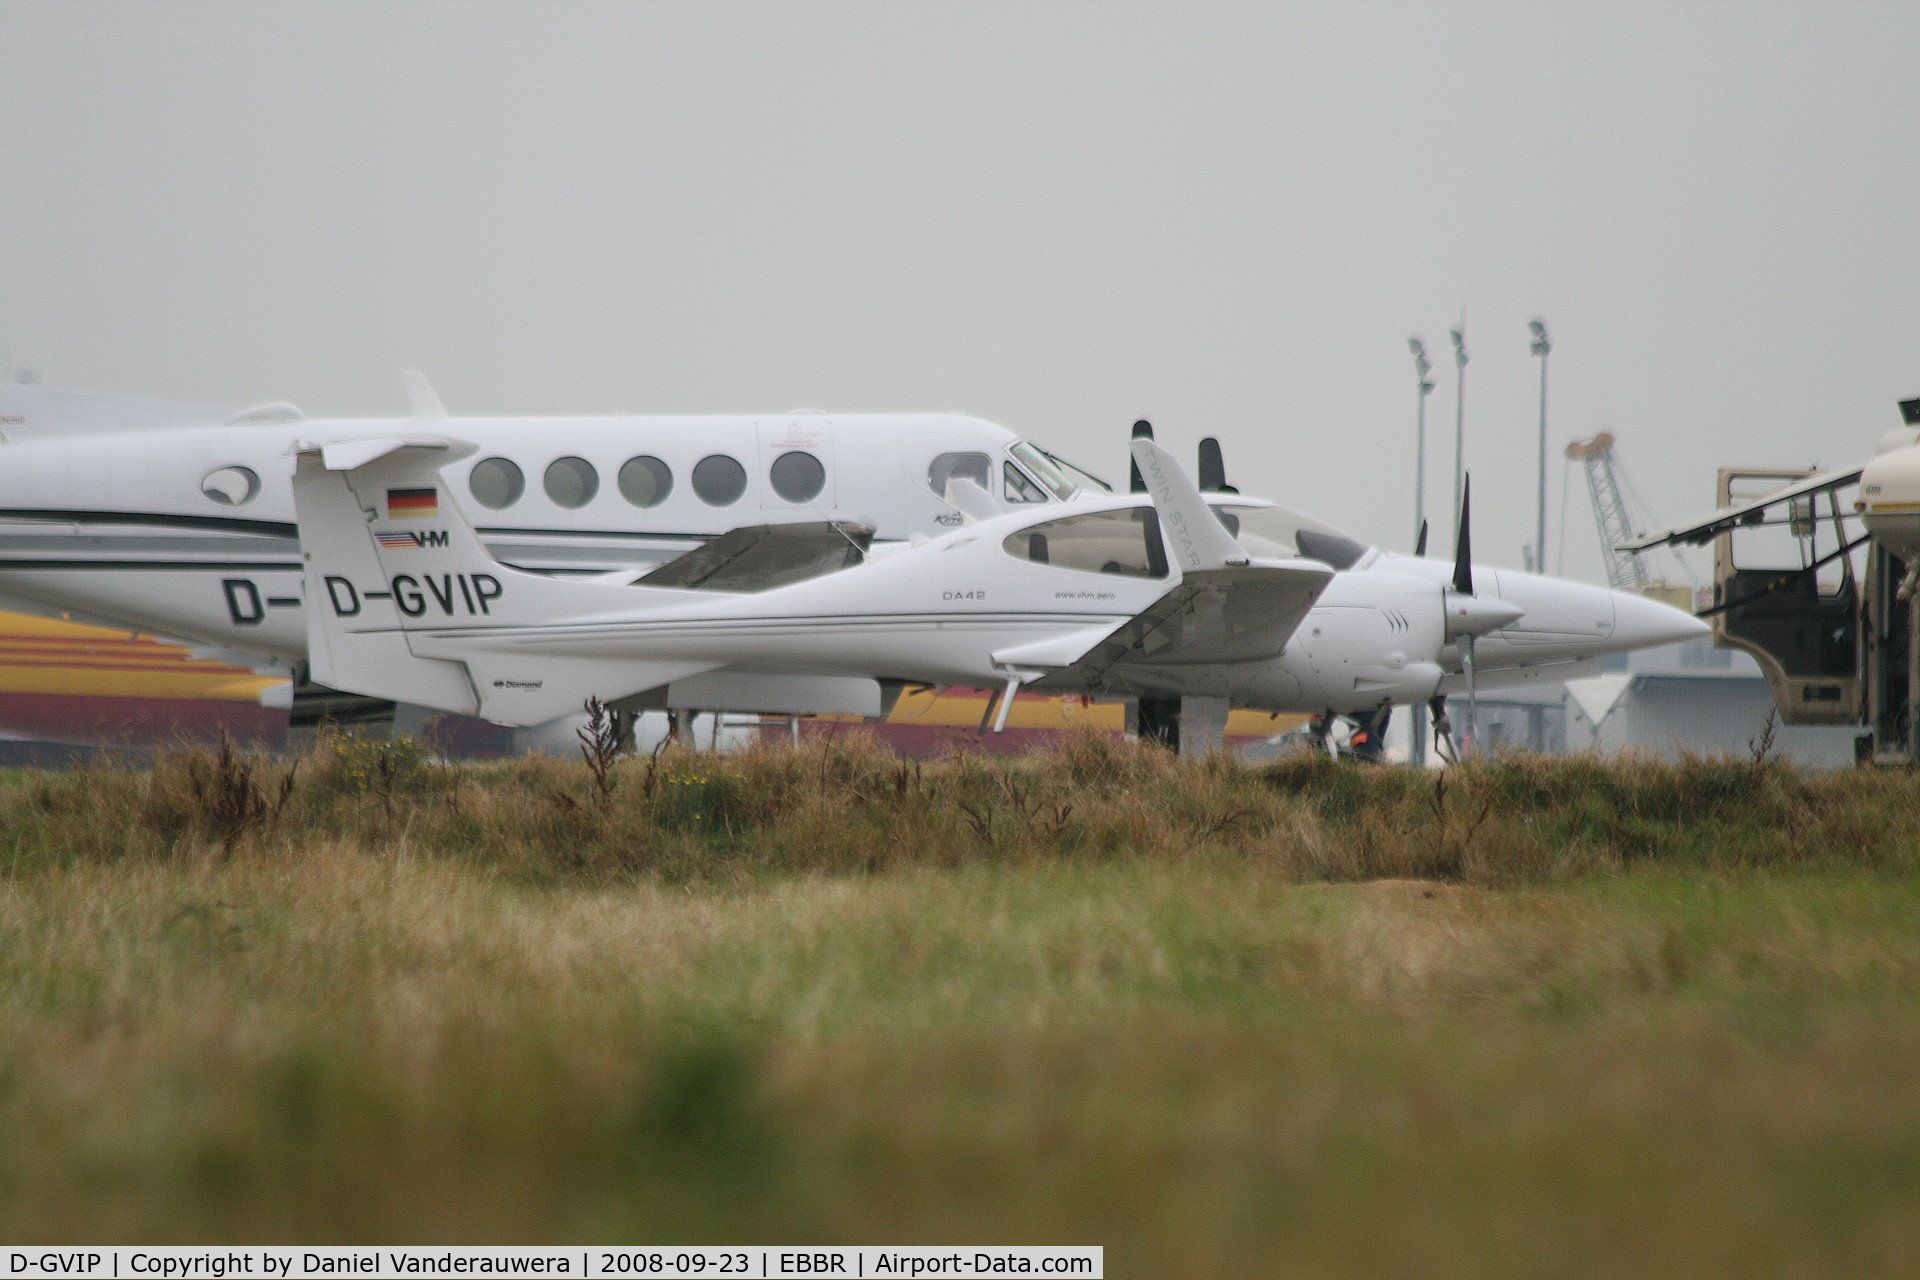 D-GVIP, 2007 Diamond DA-42 Twin Star C/N 42.257, parked on General Aviation apron (Abelag)